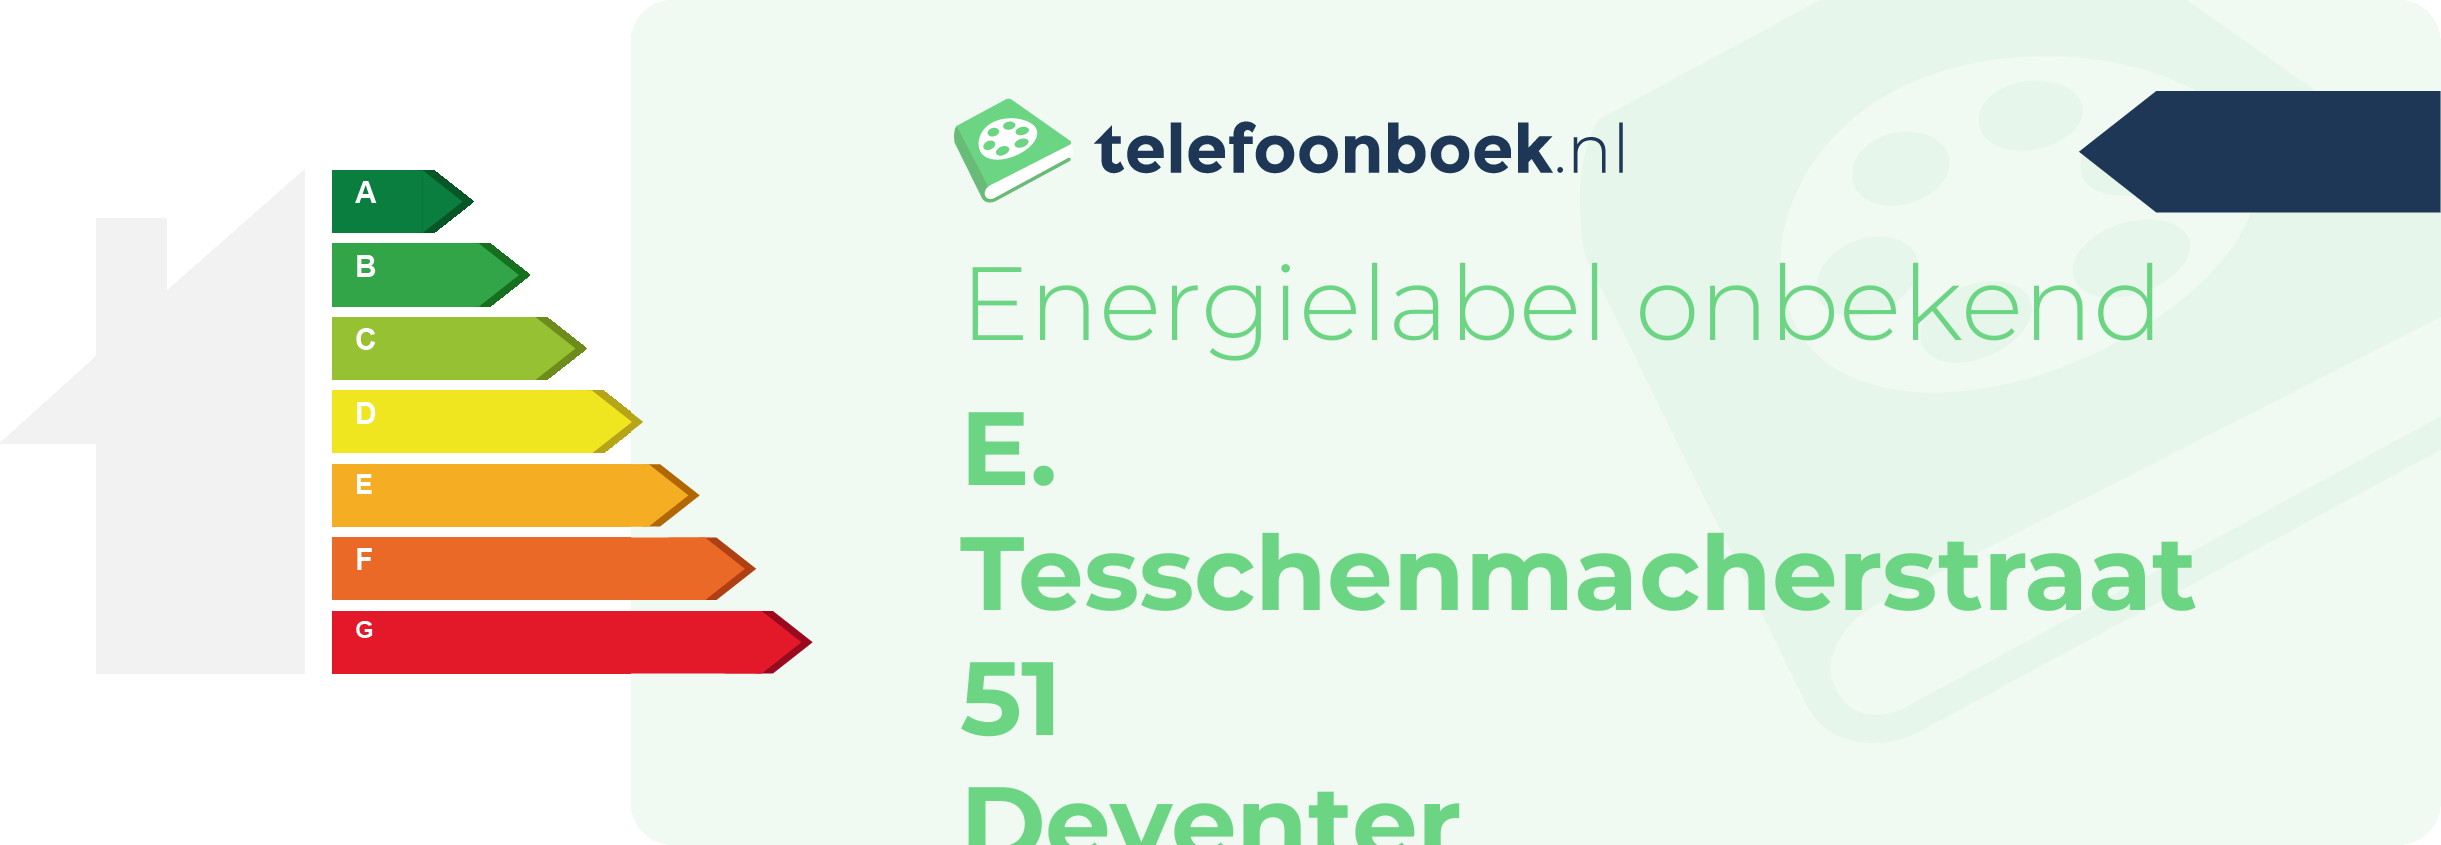 Energielabel E. Tesschenmacherstraat 51 Deventer